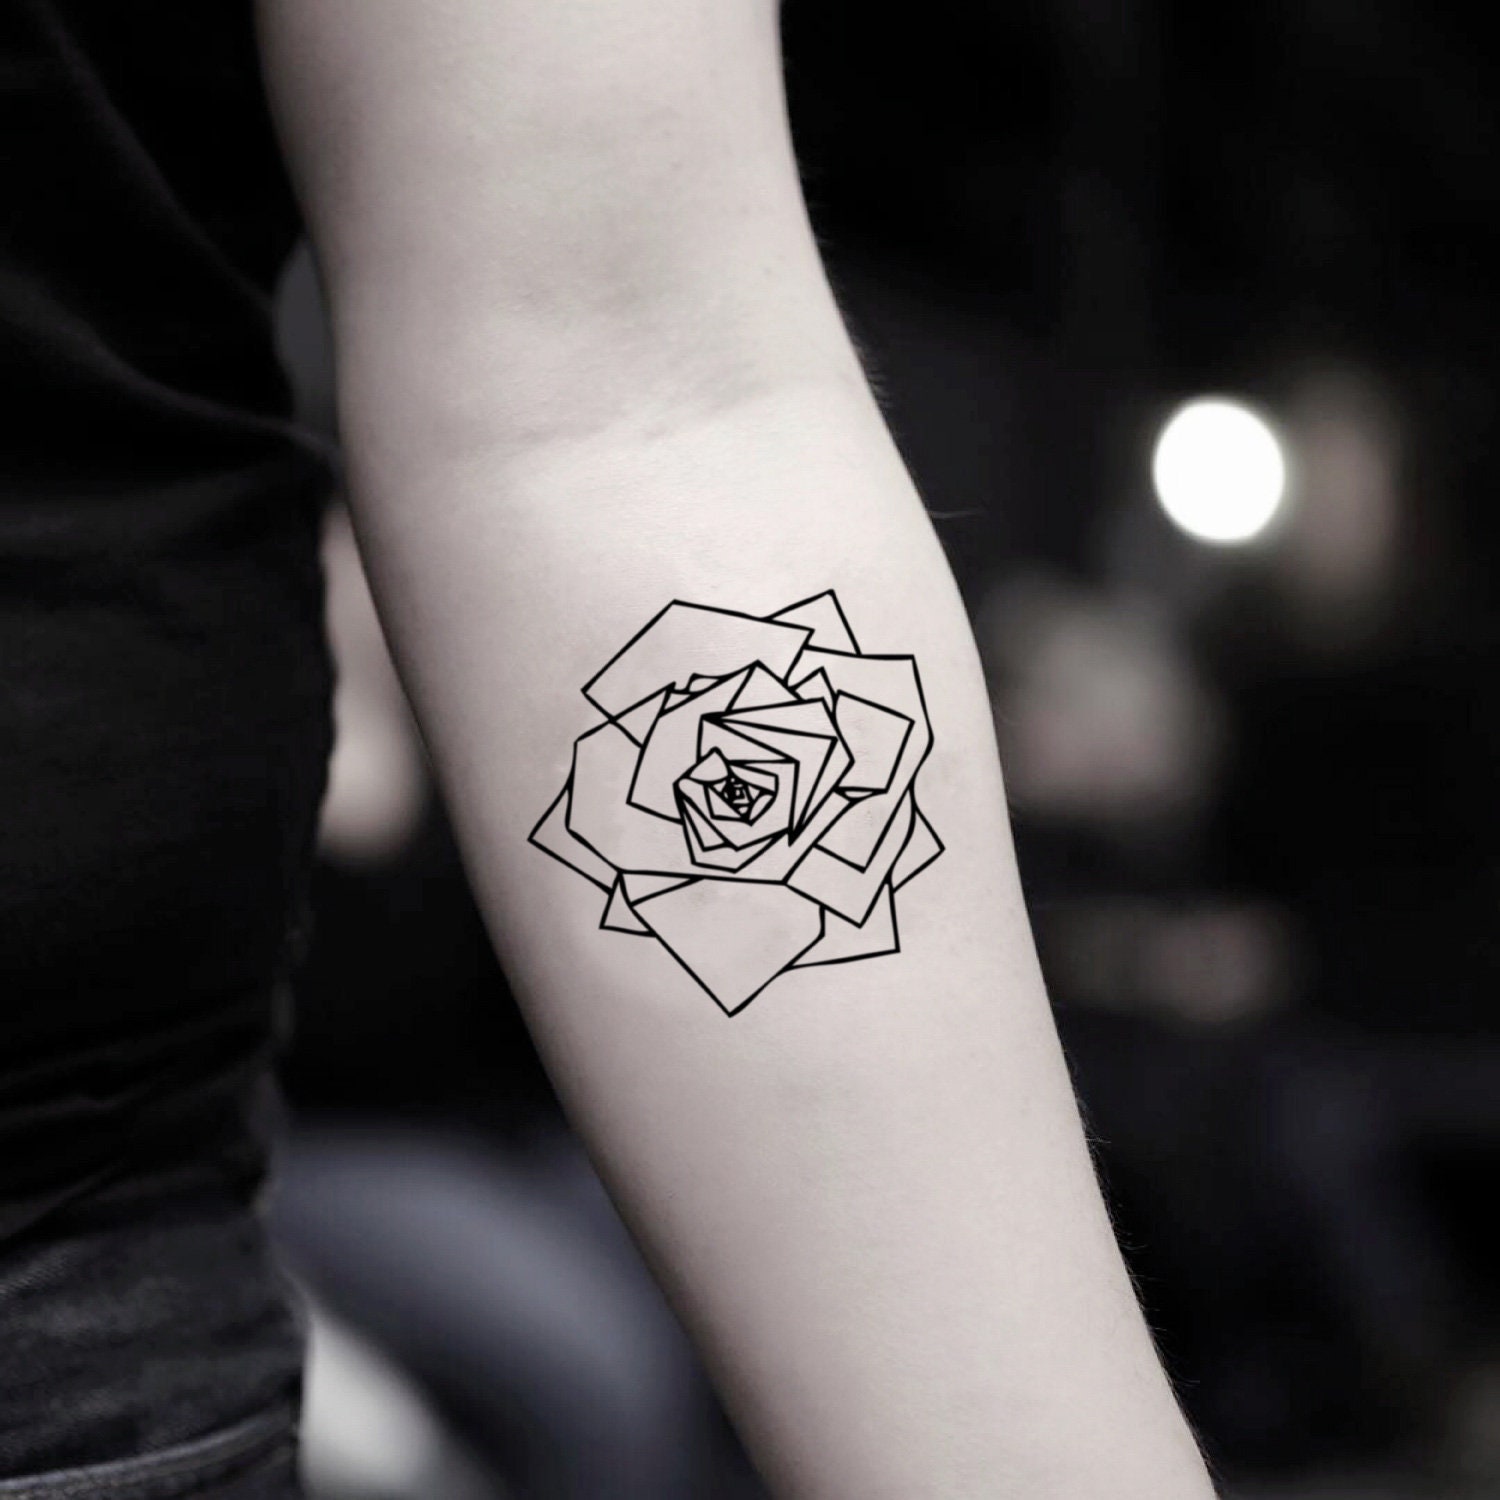 Depeche mode rose geometry tattoo by NorthernBlack on DeviantArt